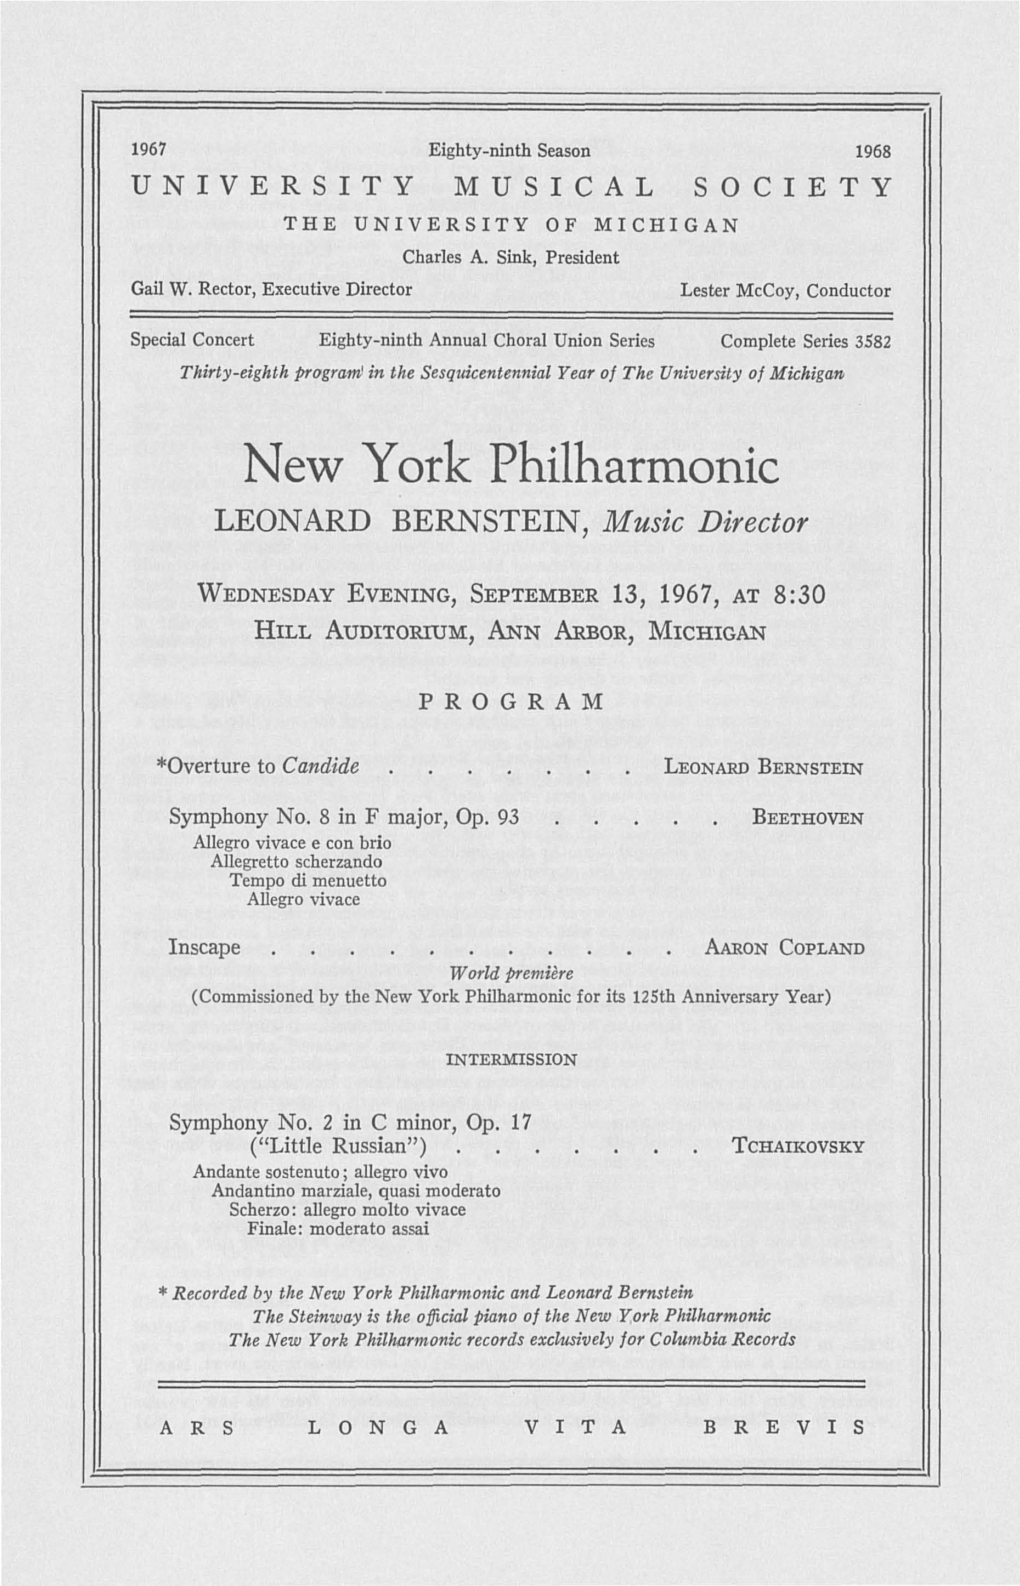 New York Philharmonic LEONARD BERNSTEIN, Music Director